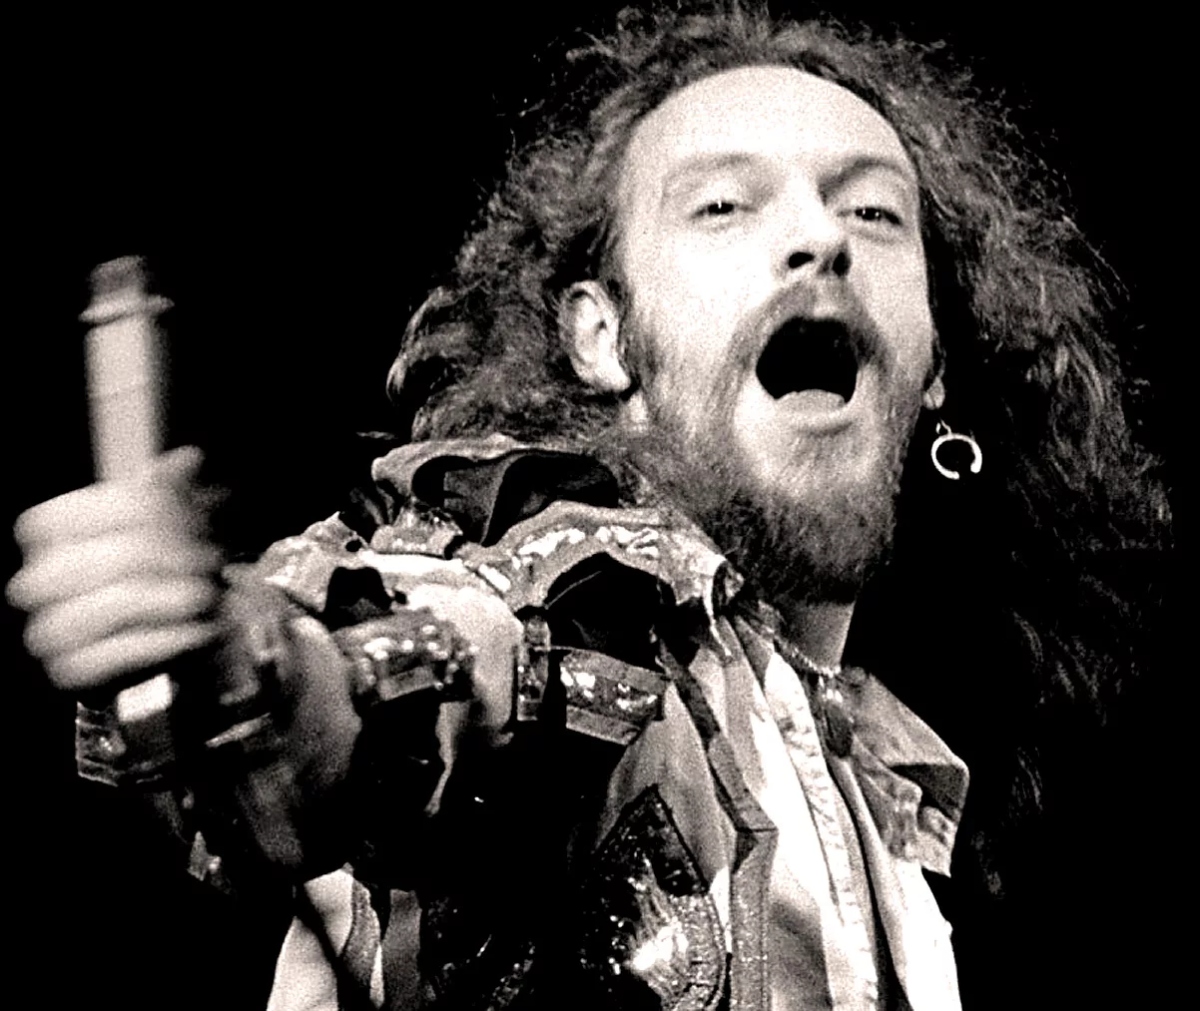 Le leader de Jethro Tull, Ian Anderson, dans sa jeunesse.